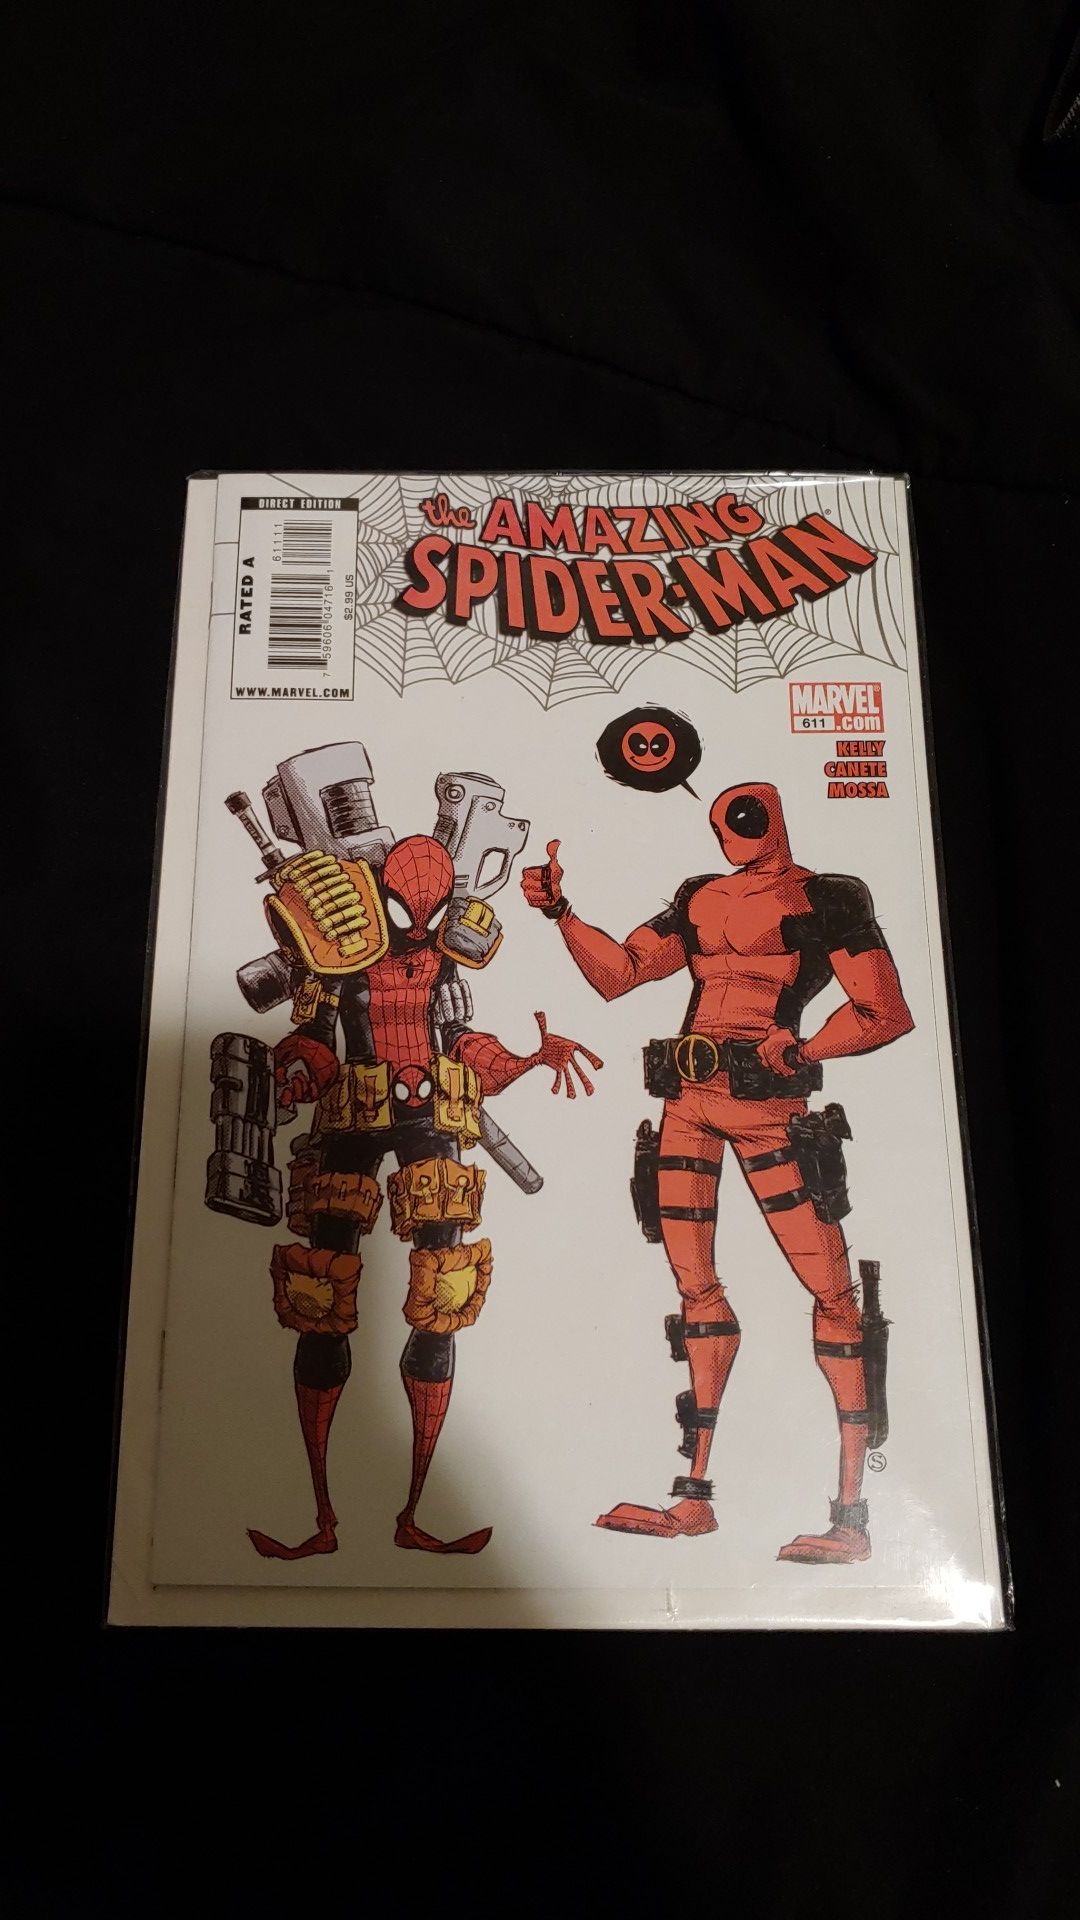 The Amazing Spider-Man comic books